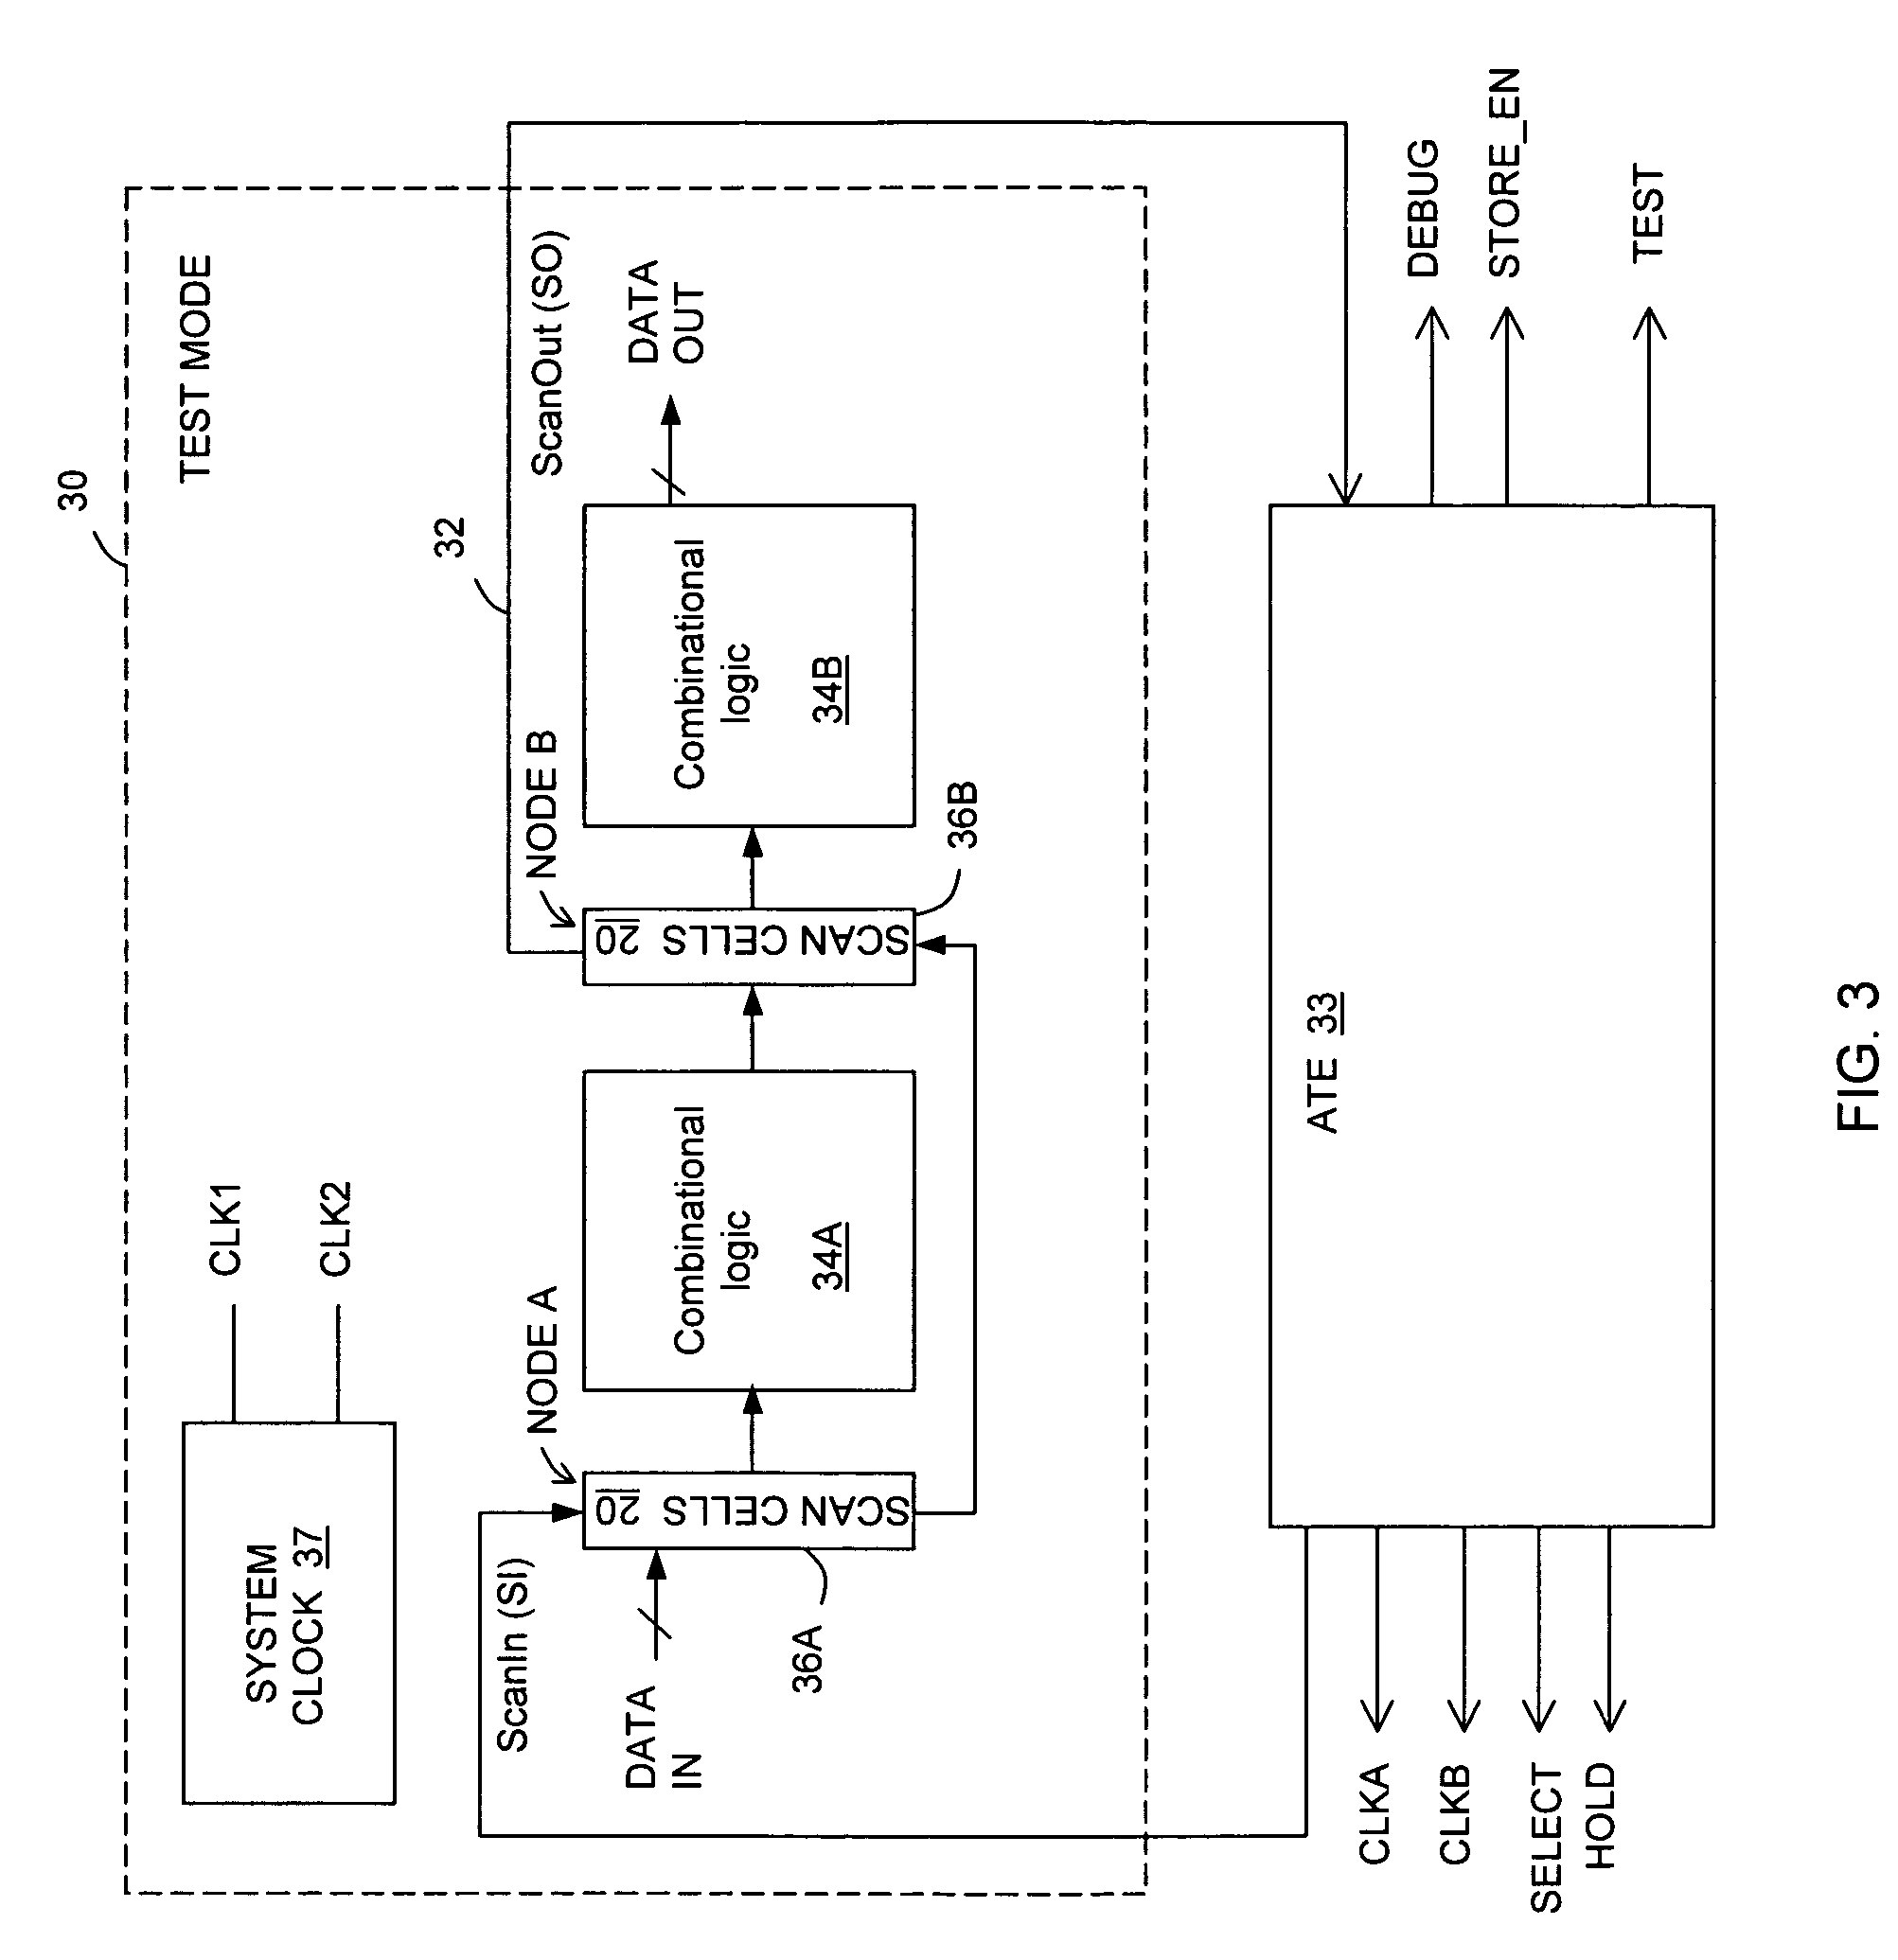 Error detecting circuit